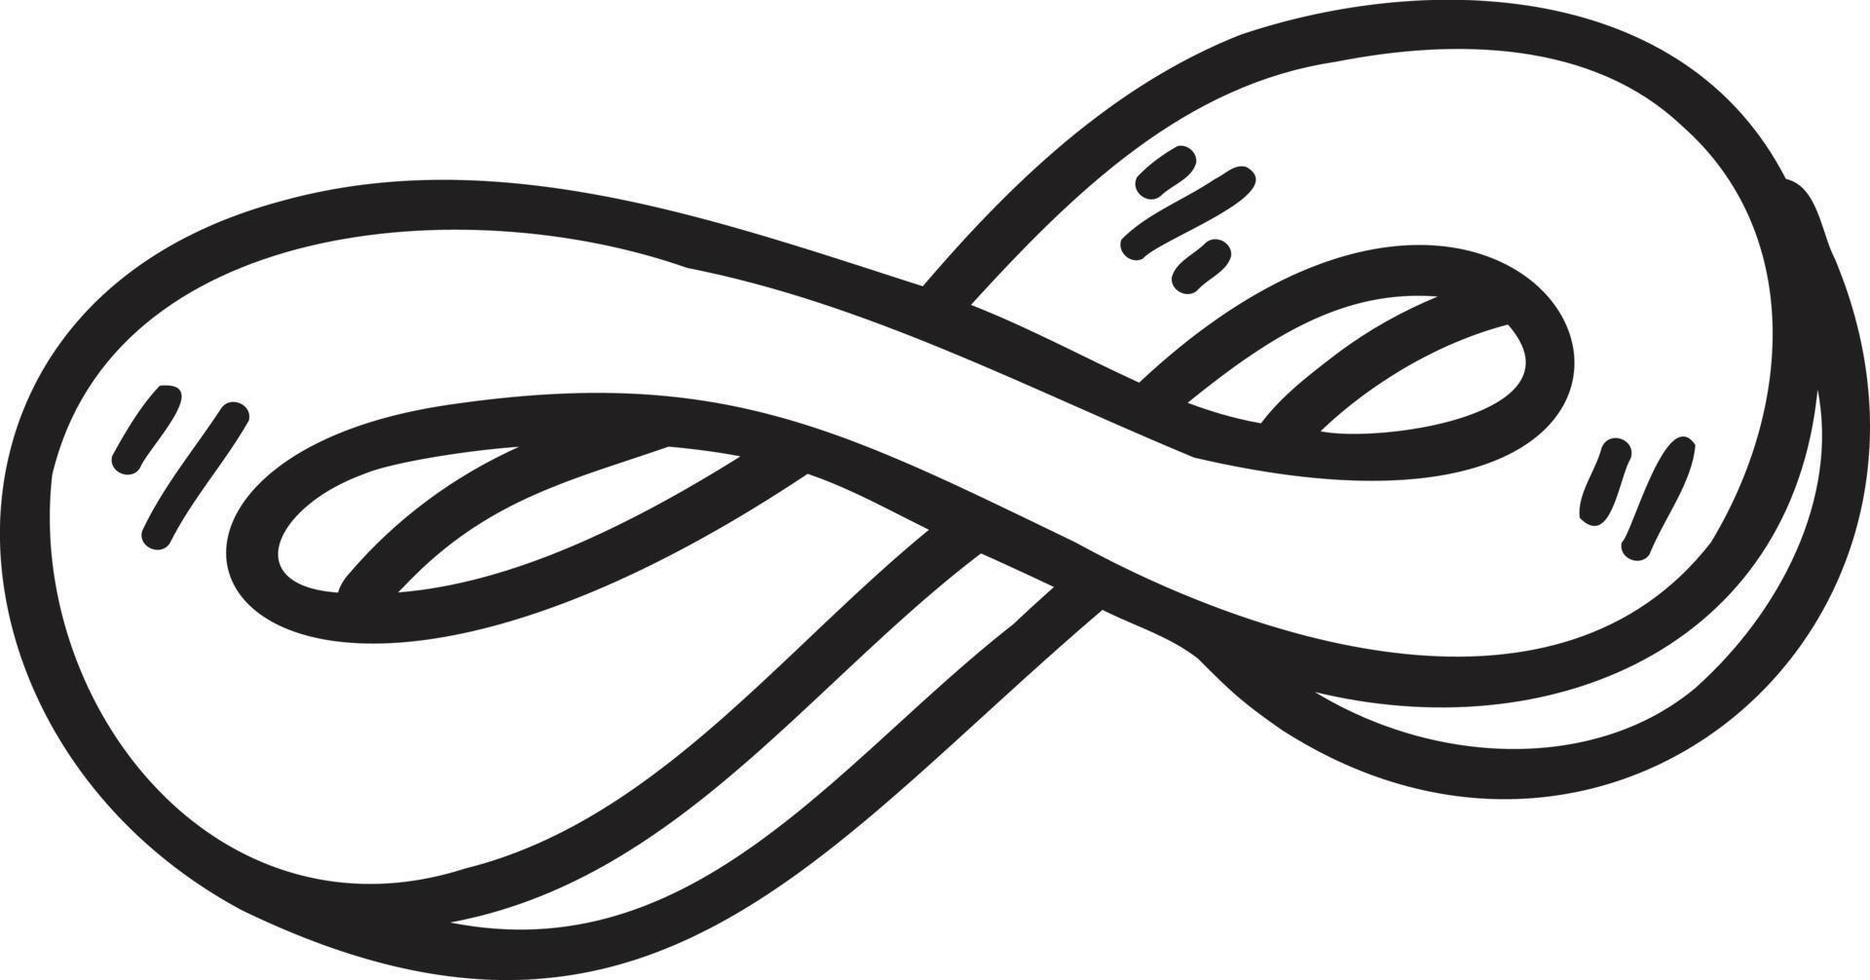 Hand Drawn infinity sign illustration vector